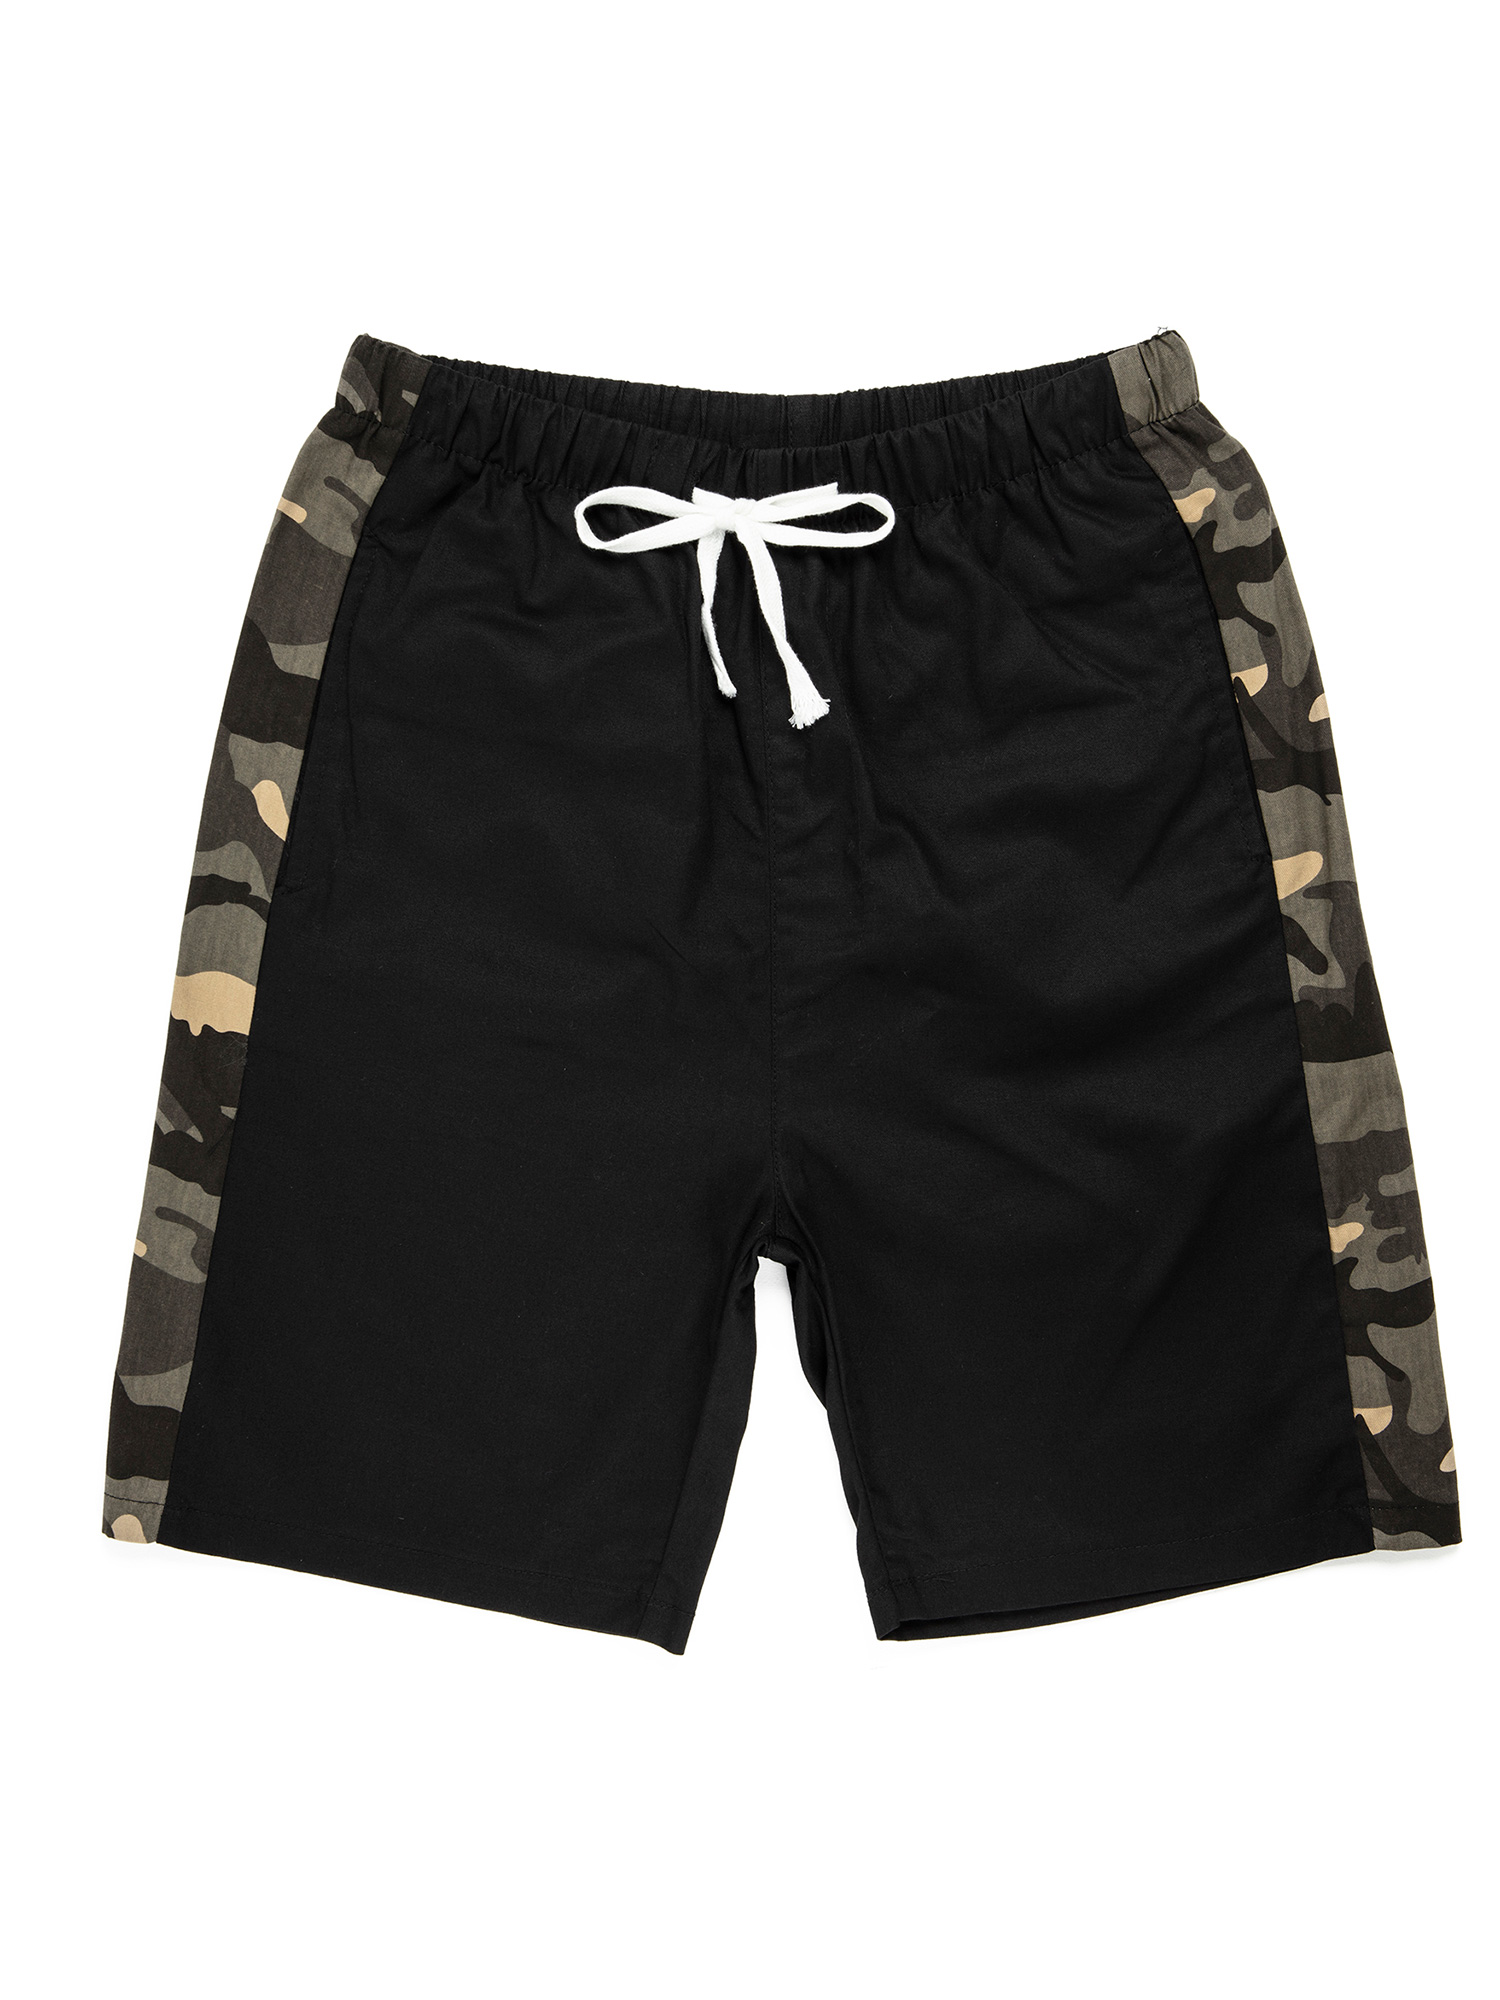 Drawstring Pants Beach Shorts with Elastic Waist Party SAMACHICA Men's Fashion Shorts Summer Casual Short 